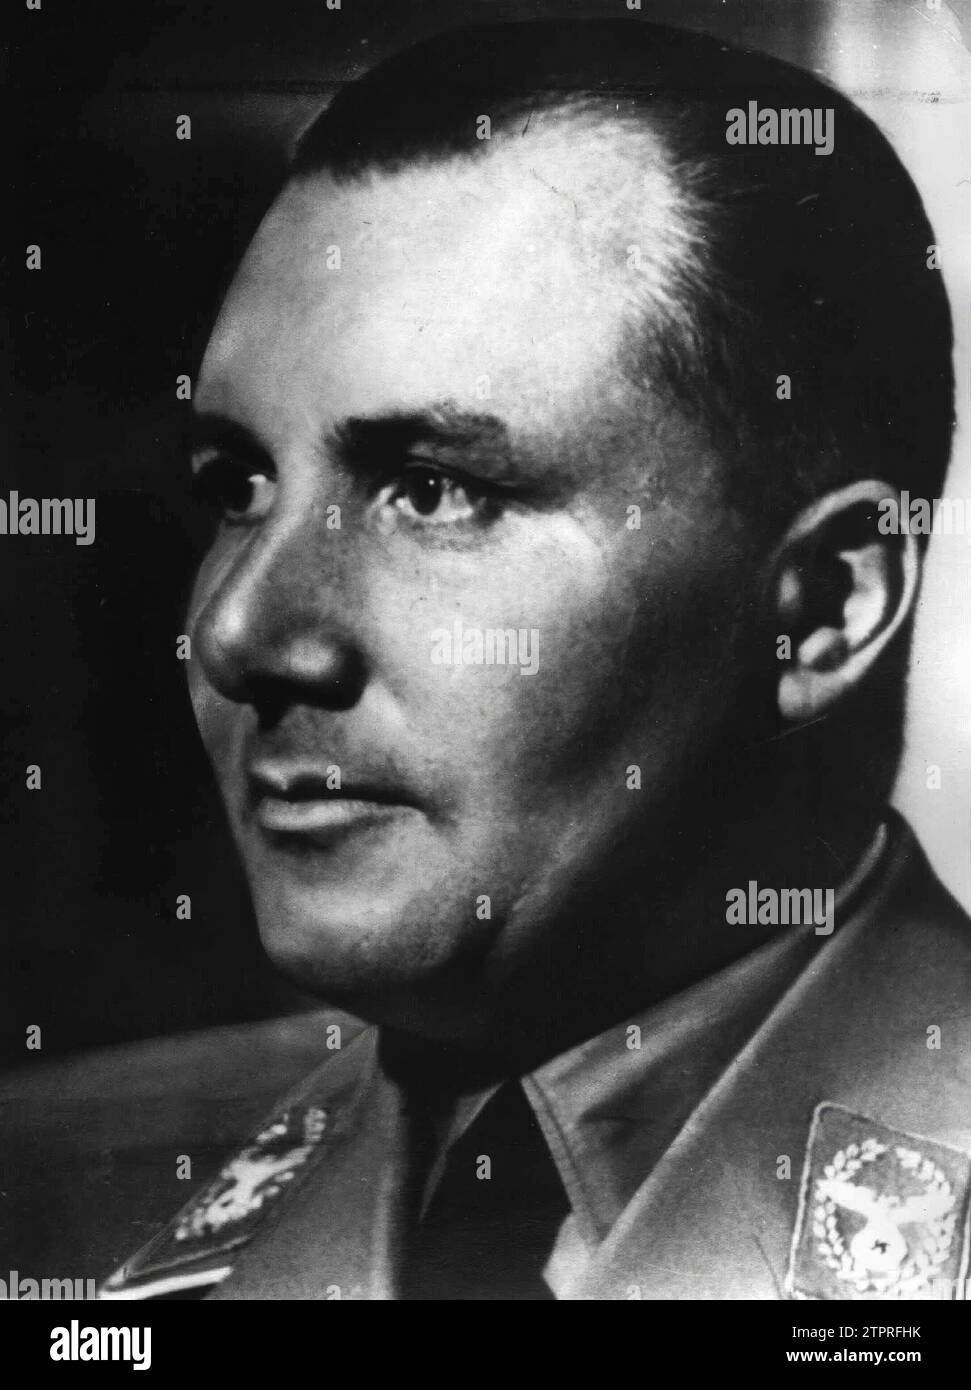 12/31/1939. Martin Bormann, prominent leader of Nazi Germany and personal secretary of Adolf Hitler. Credit: Album / Archivo ABC Stock Photo